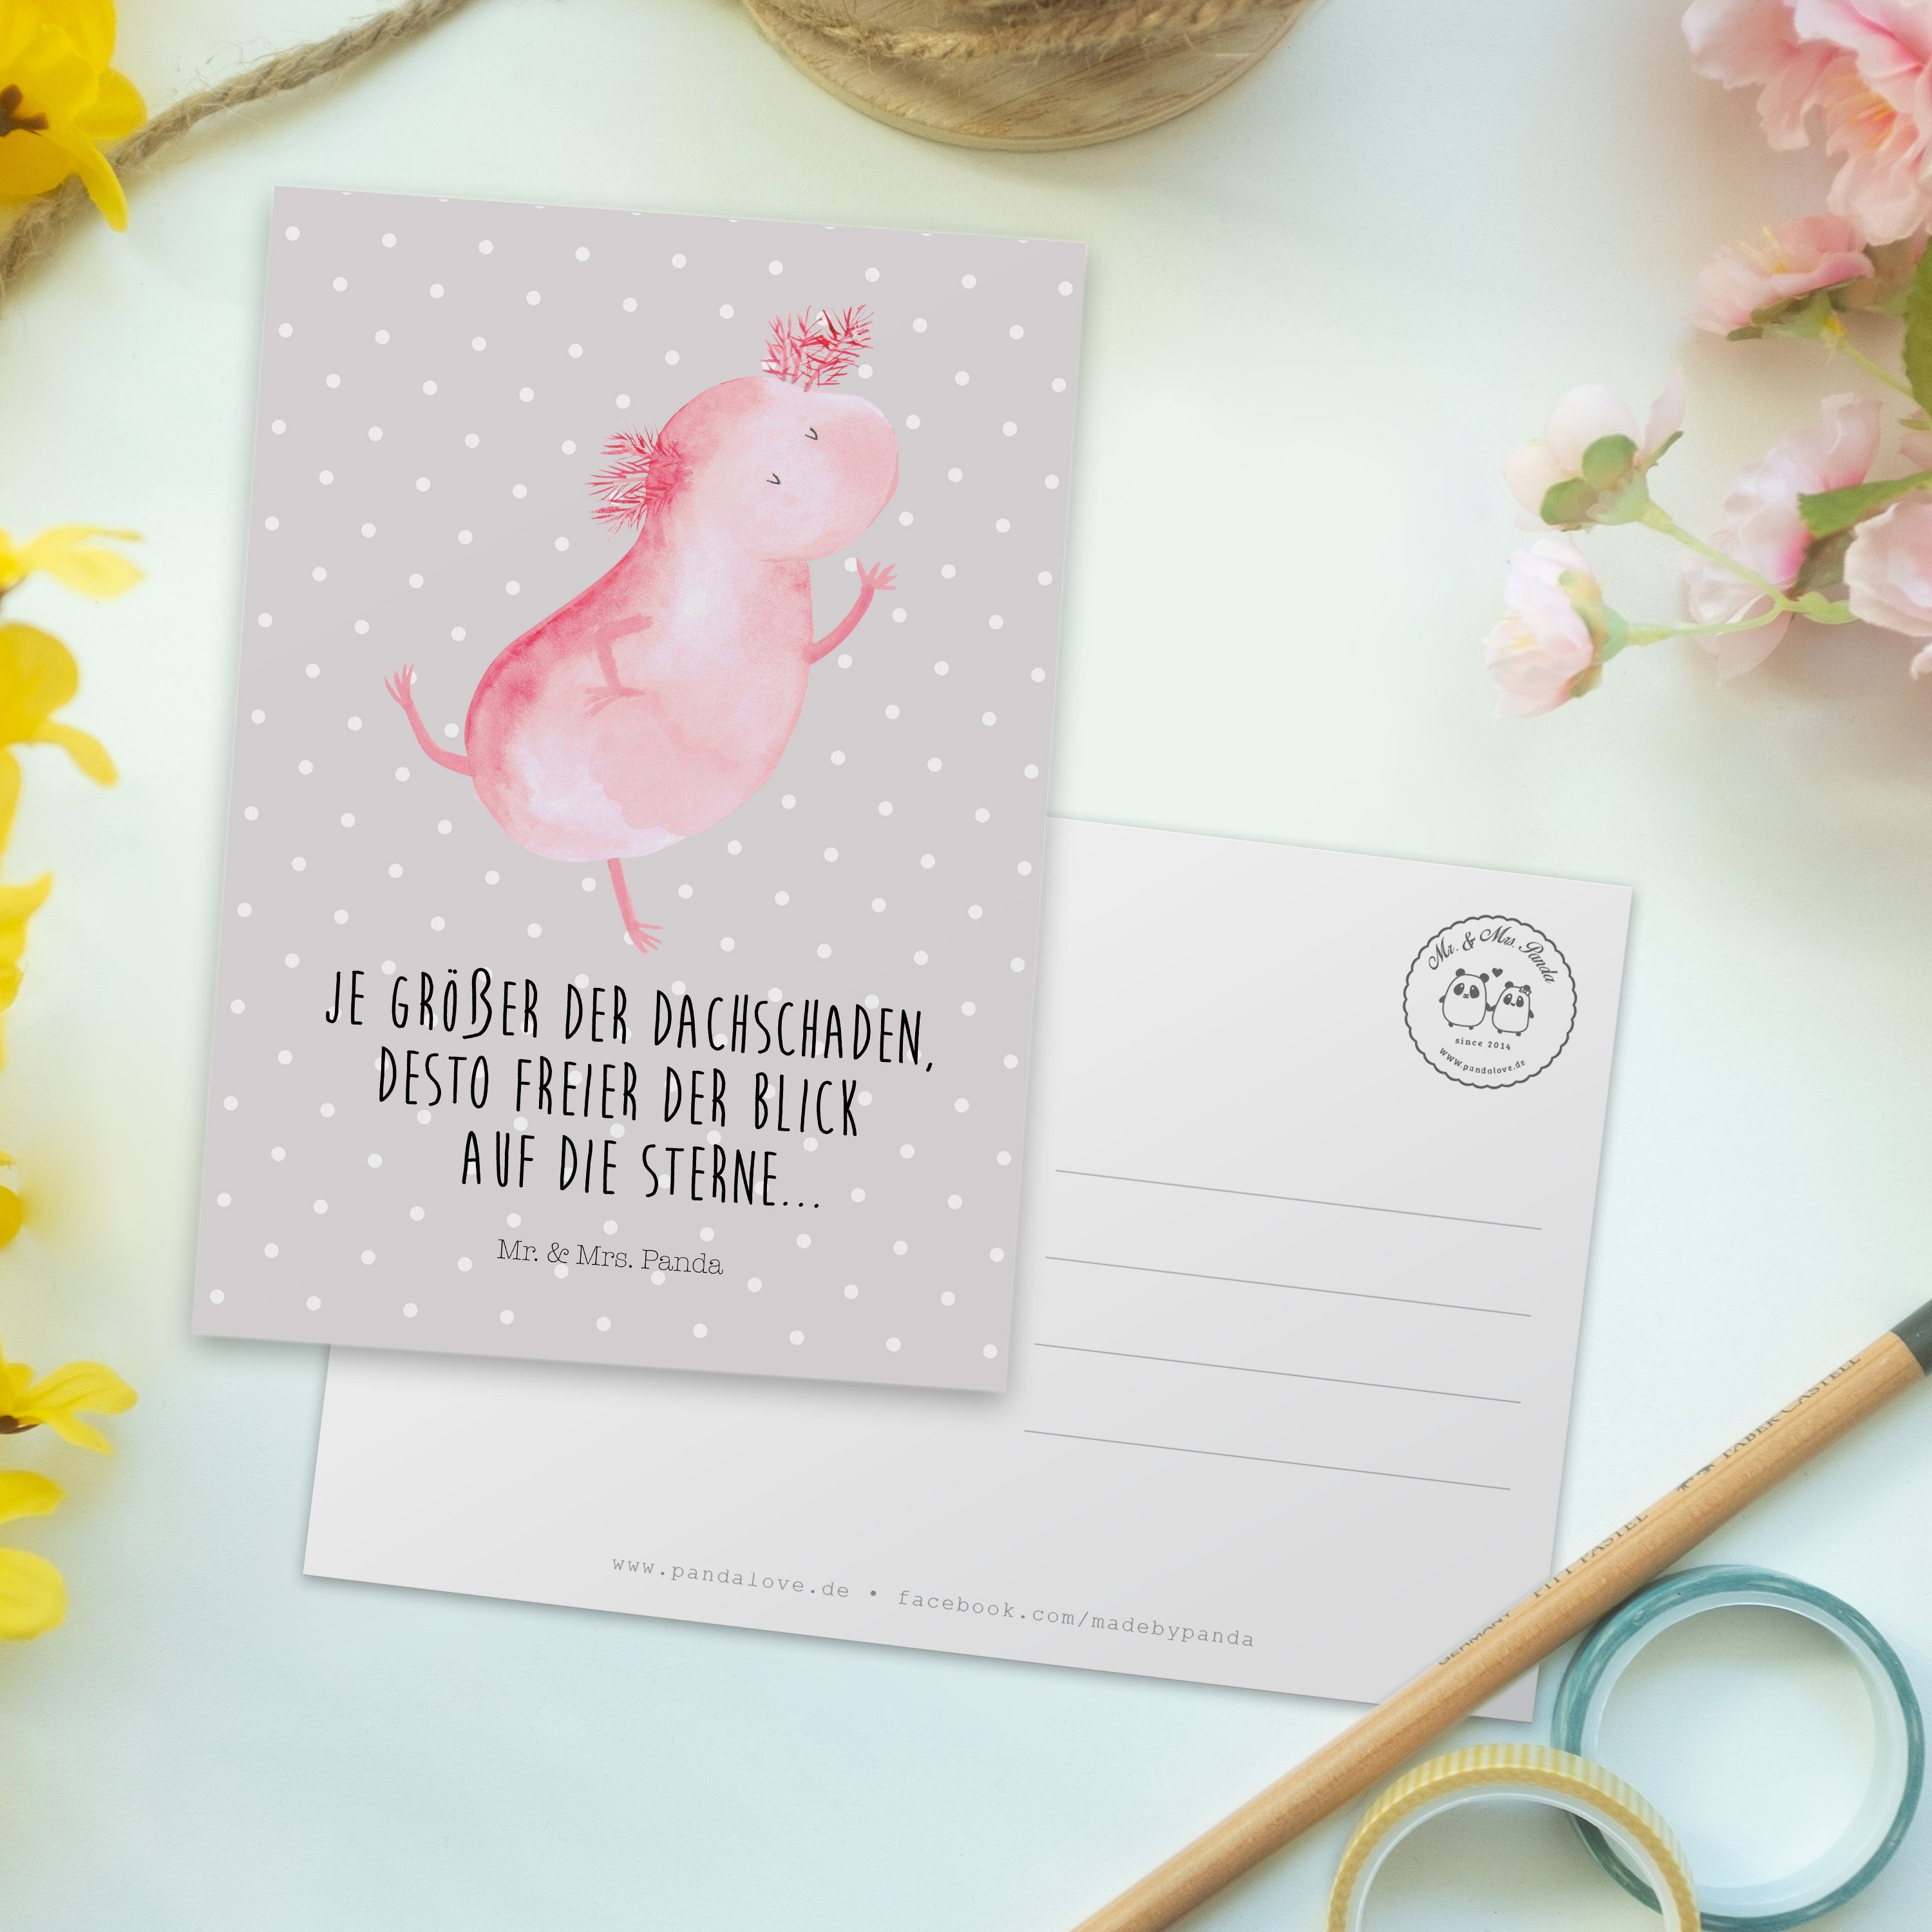 Mr. & Mrs. Panda tanzt Axolotl Dankeskarte, Pastell Amphibie, Geschenk, - Grau - Postkarte Karte